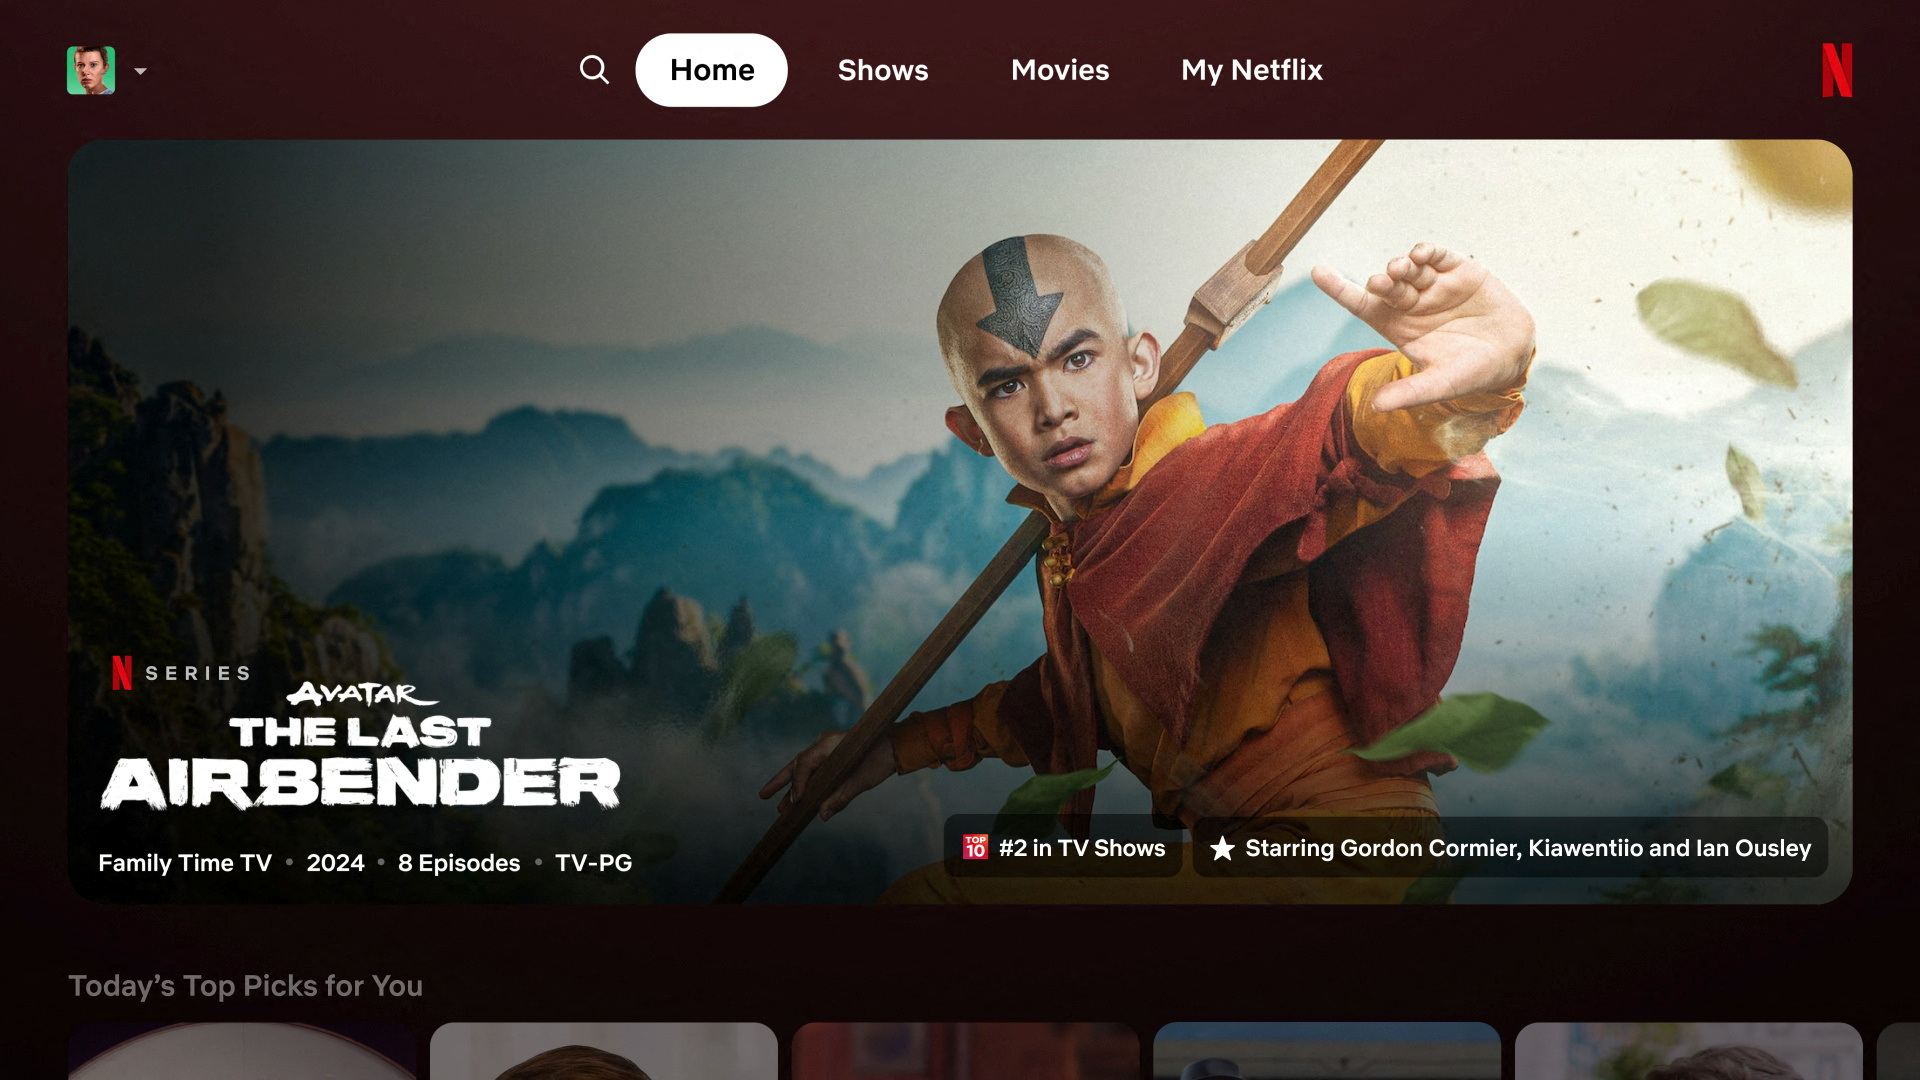 Netflix tests TV app redesign